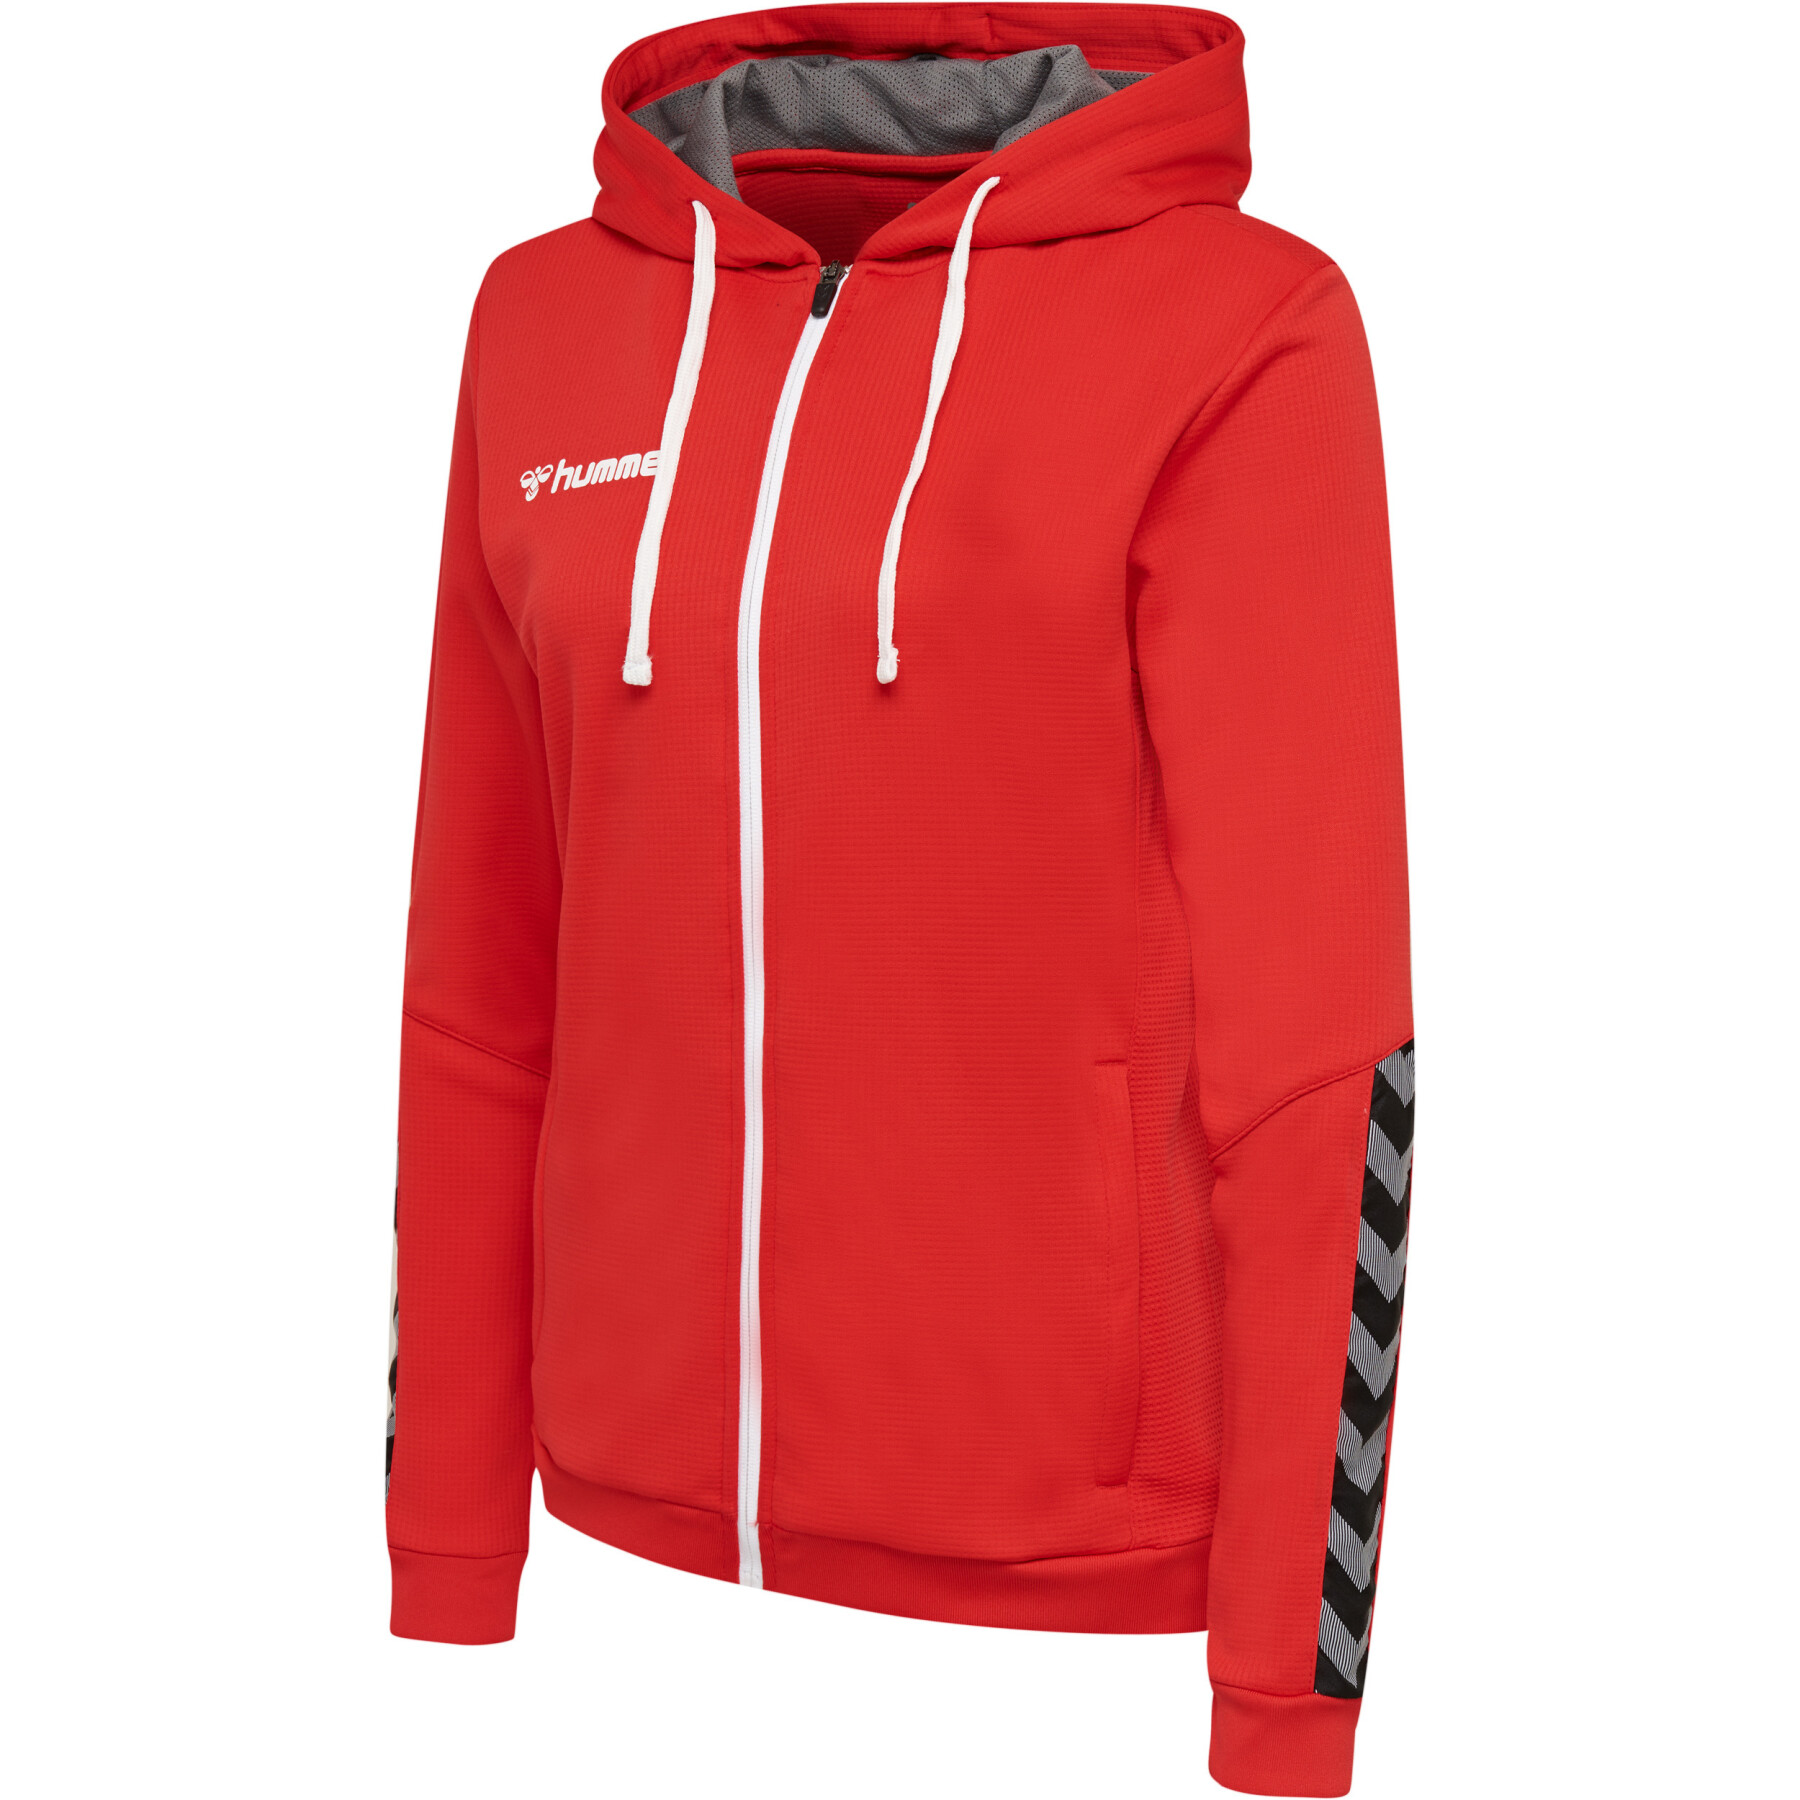 Women\'s hooded sweatshirt Hummel zip hmlAUTHENTIC Poly - Hummel - Brands -  Handball wear